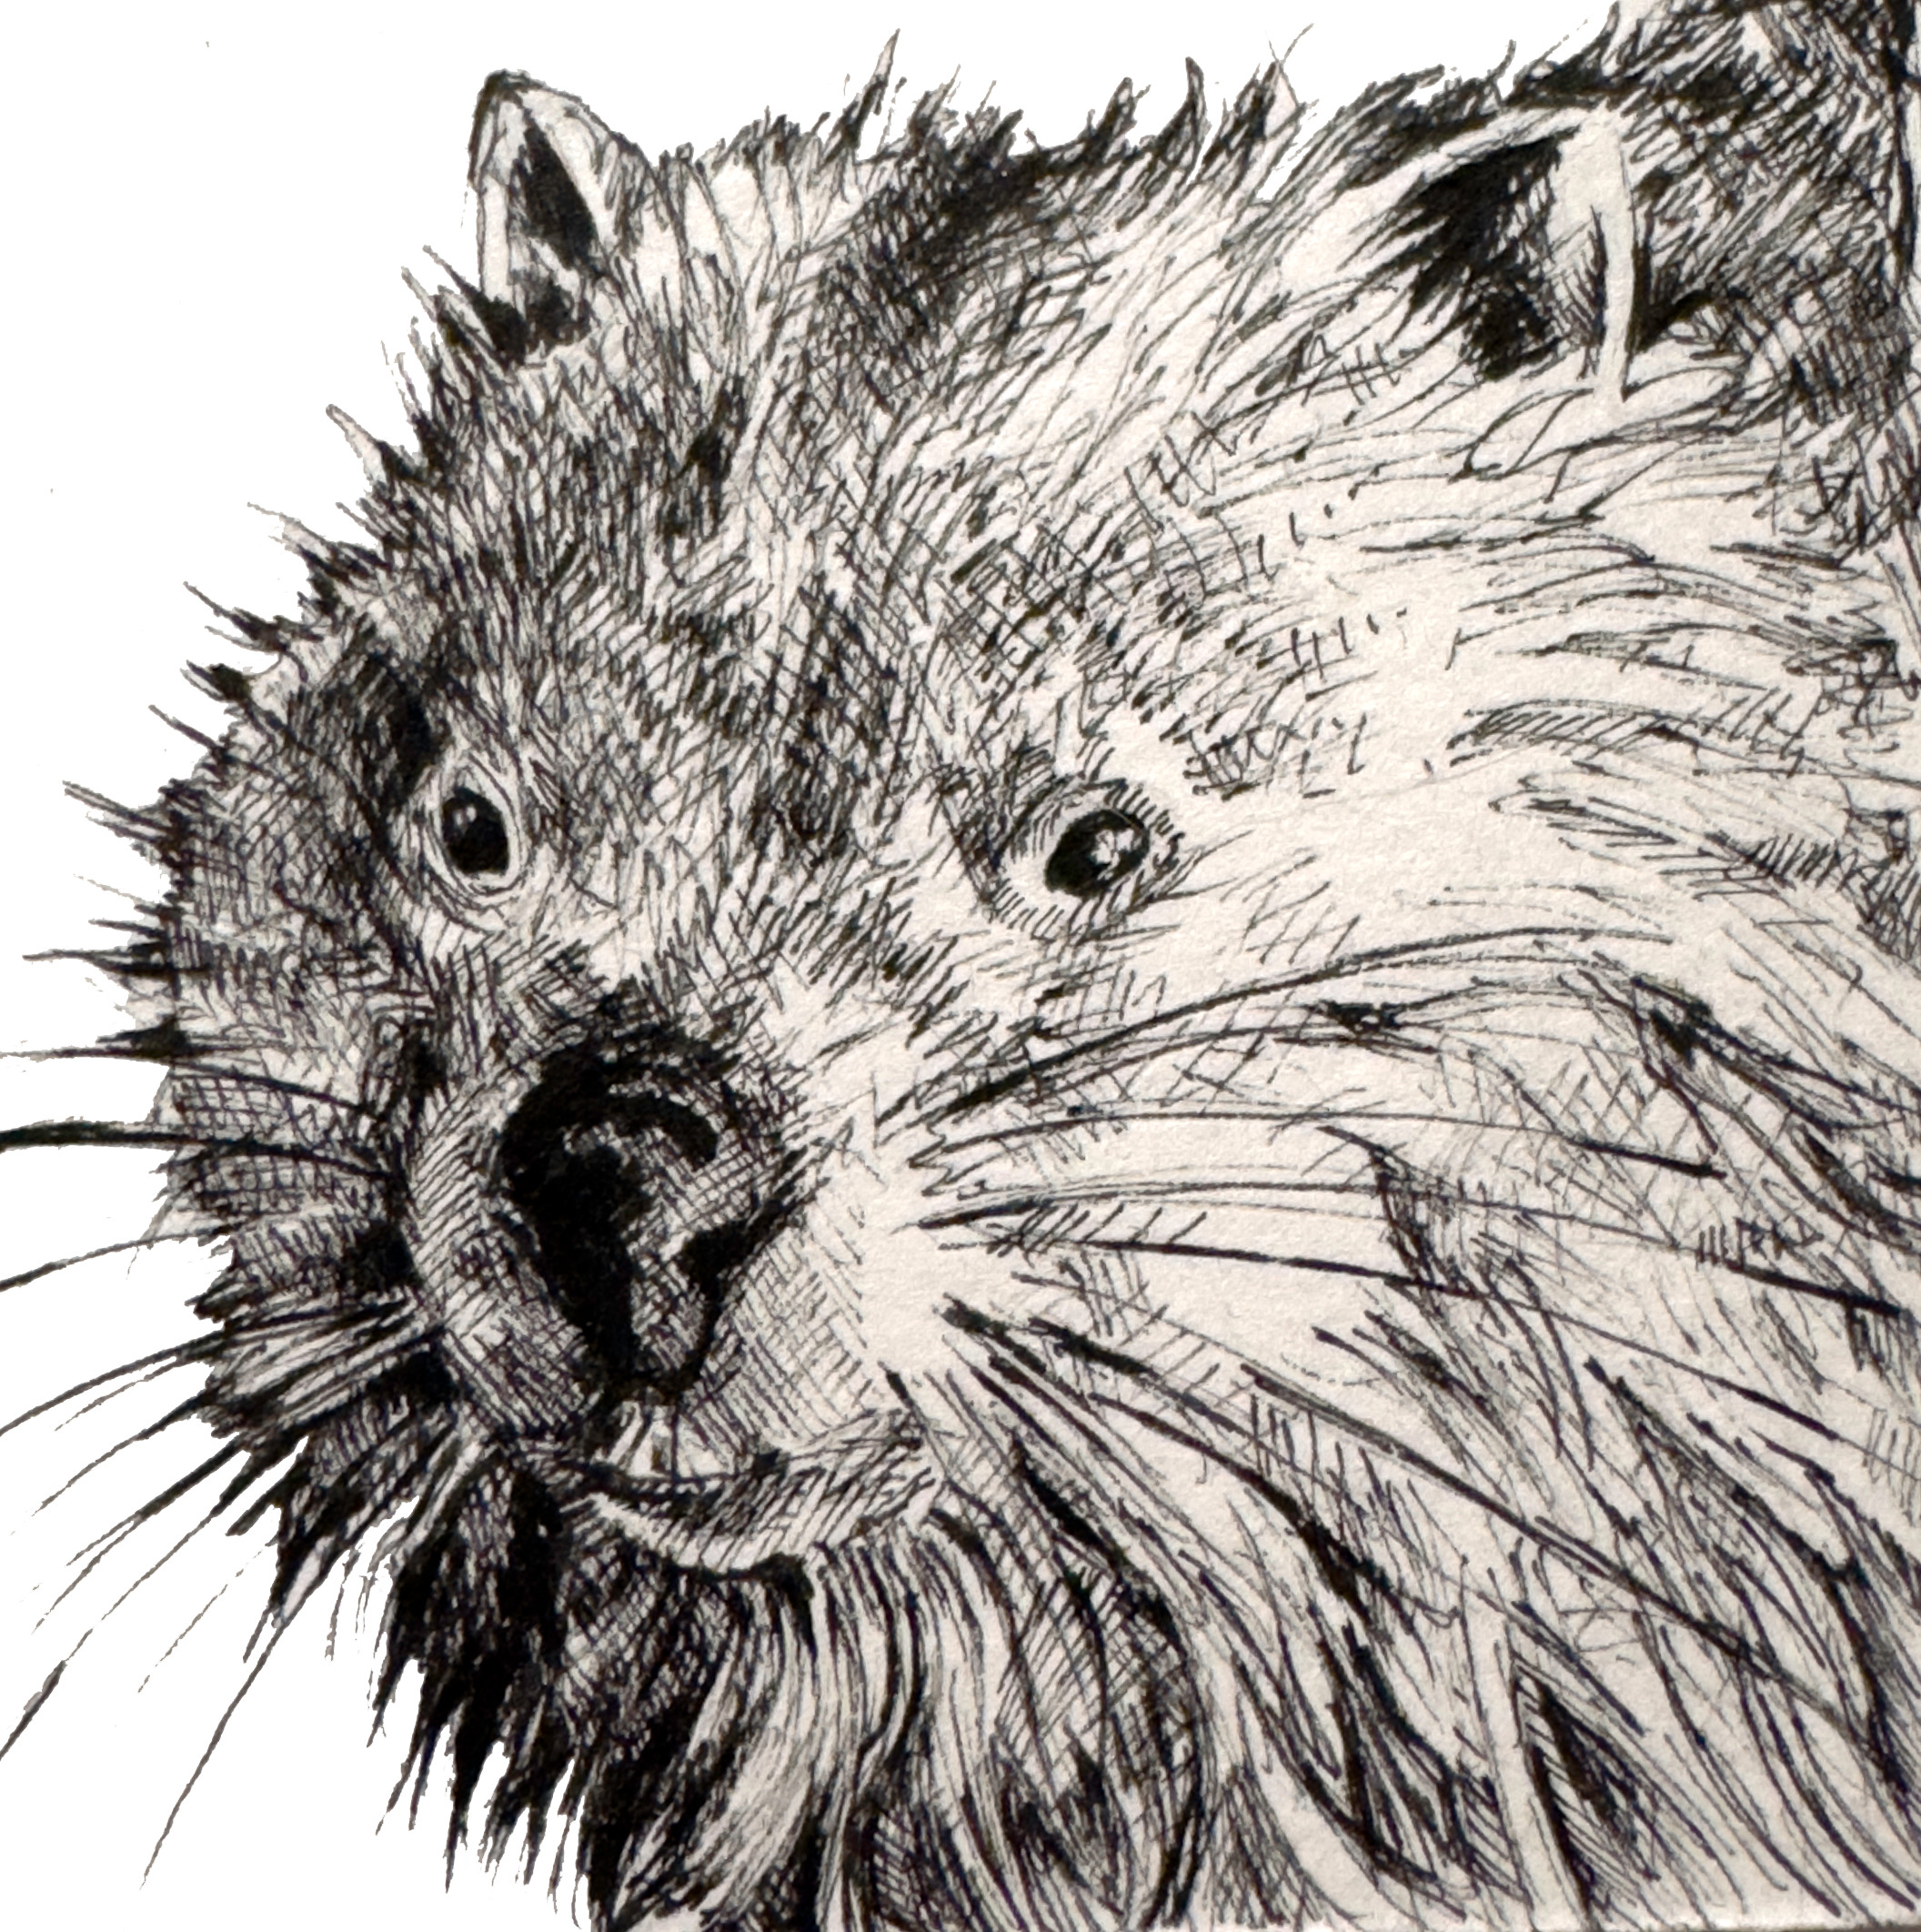 Wombat nzirag